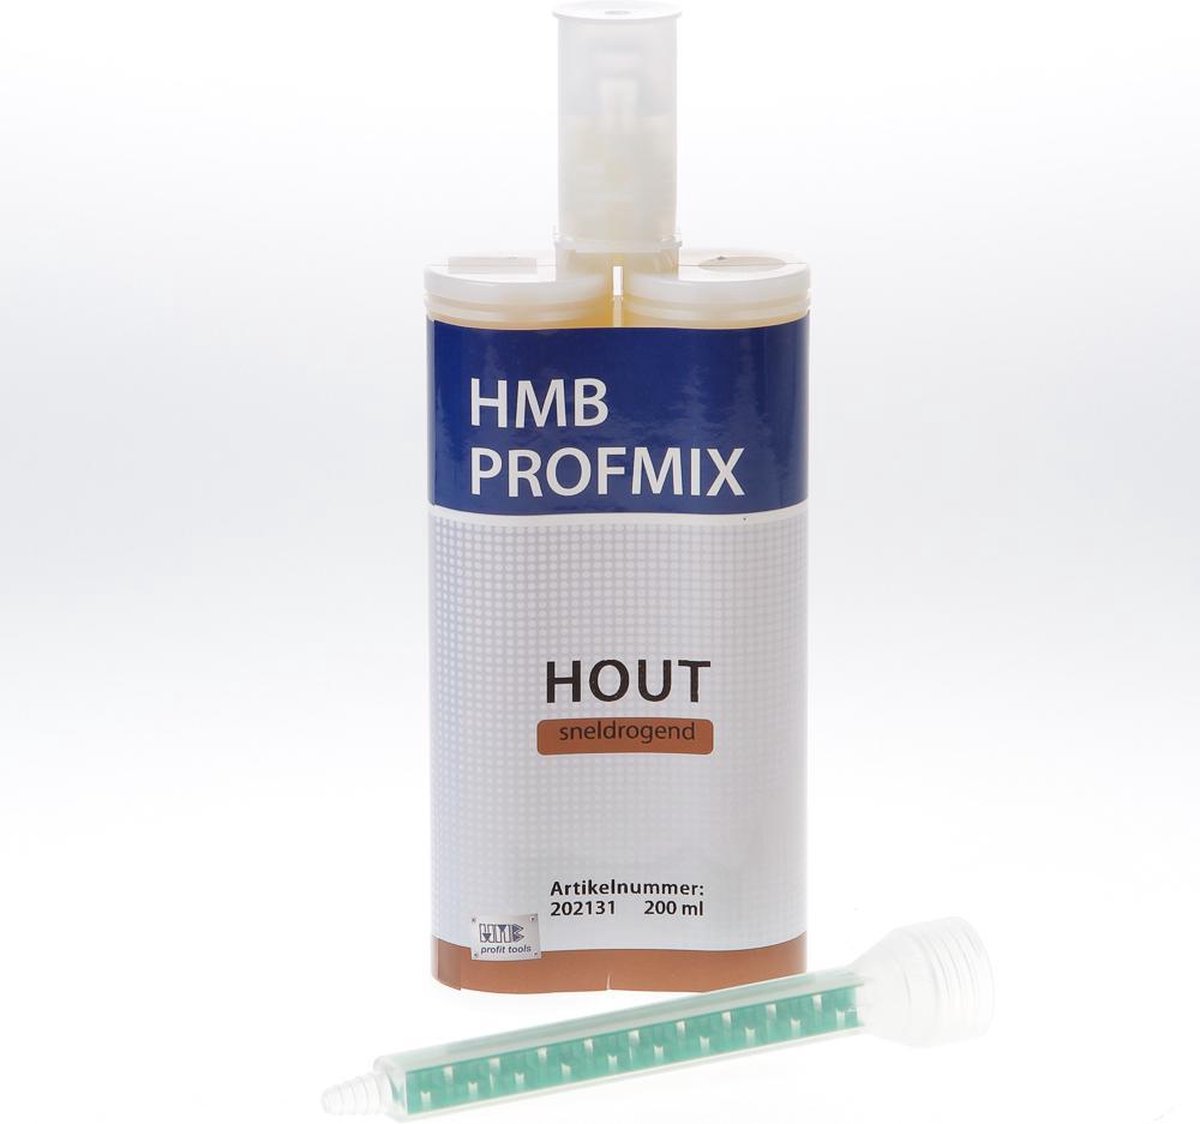 HMB profmix hout - transparant sneldrogend - 200ml - 1st